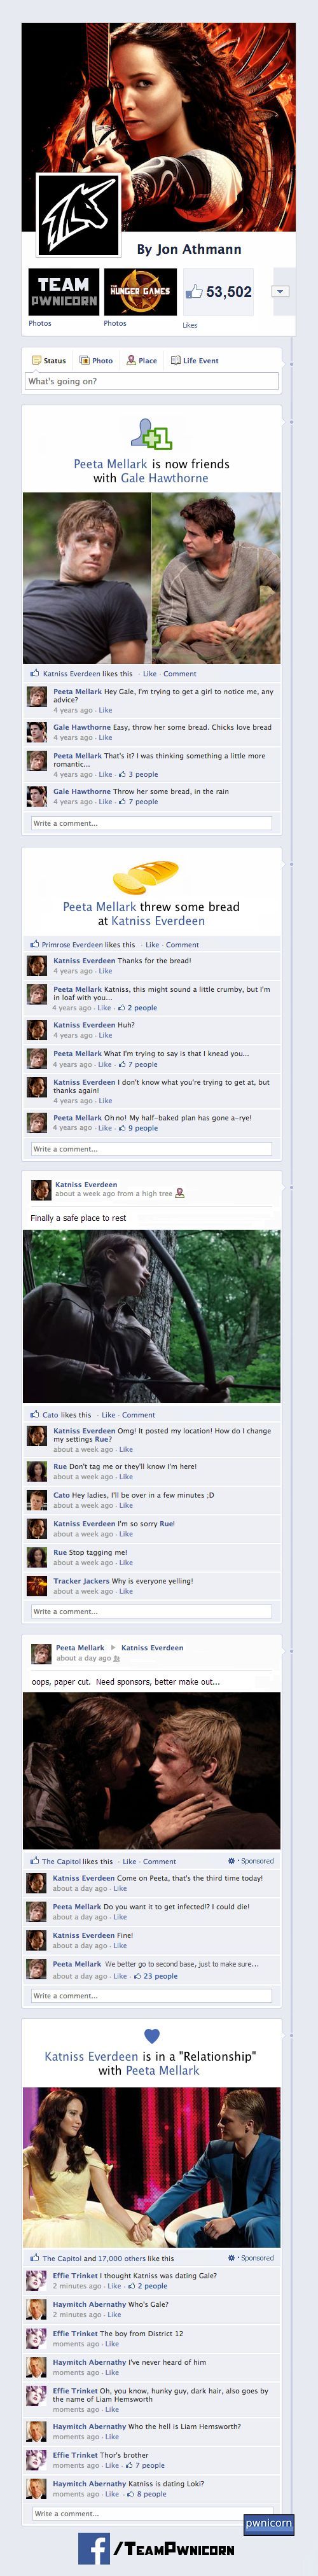 Katniss is dating Loki? Hahahaha